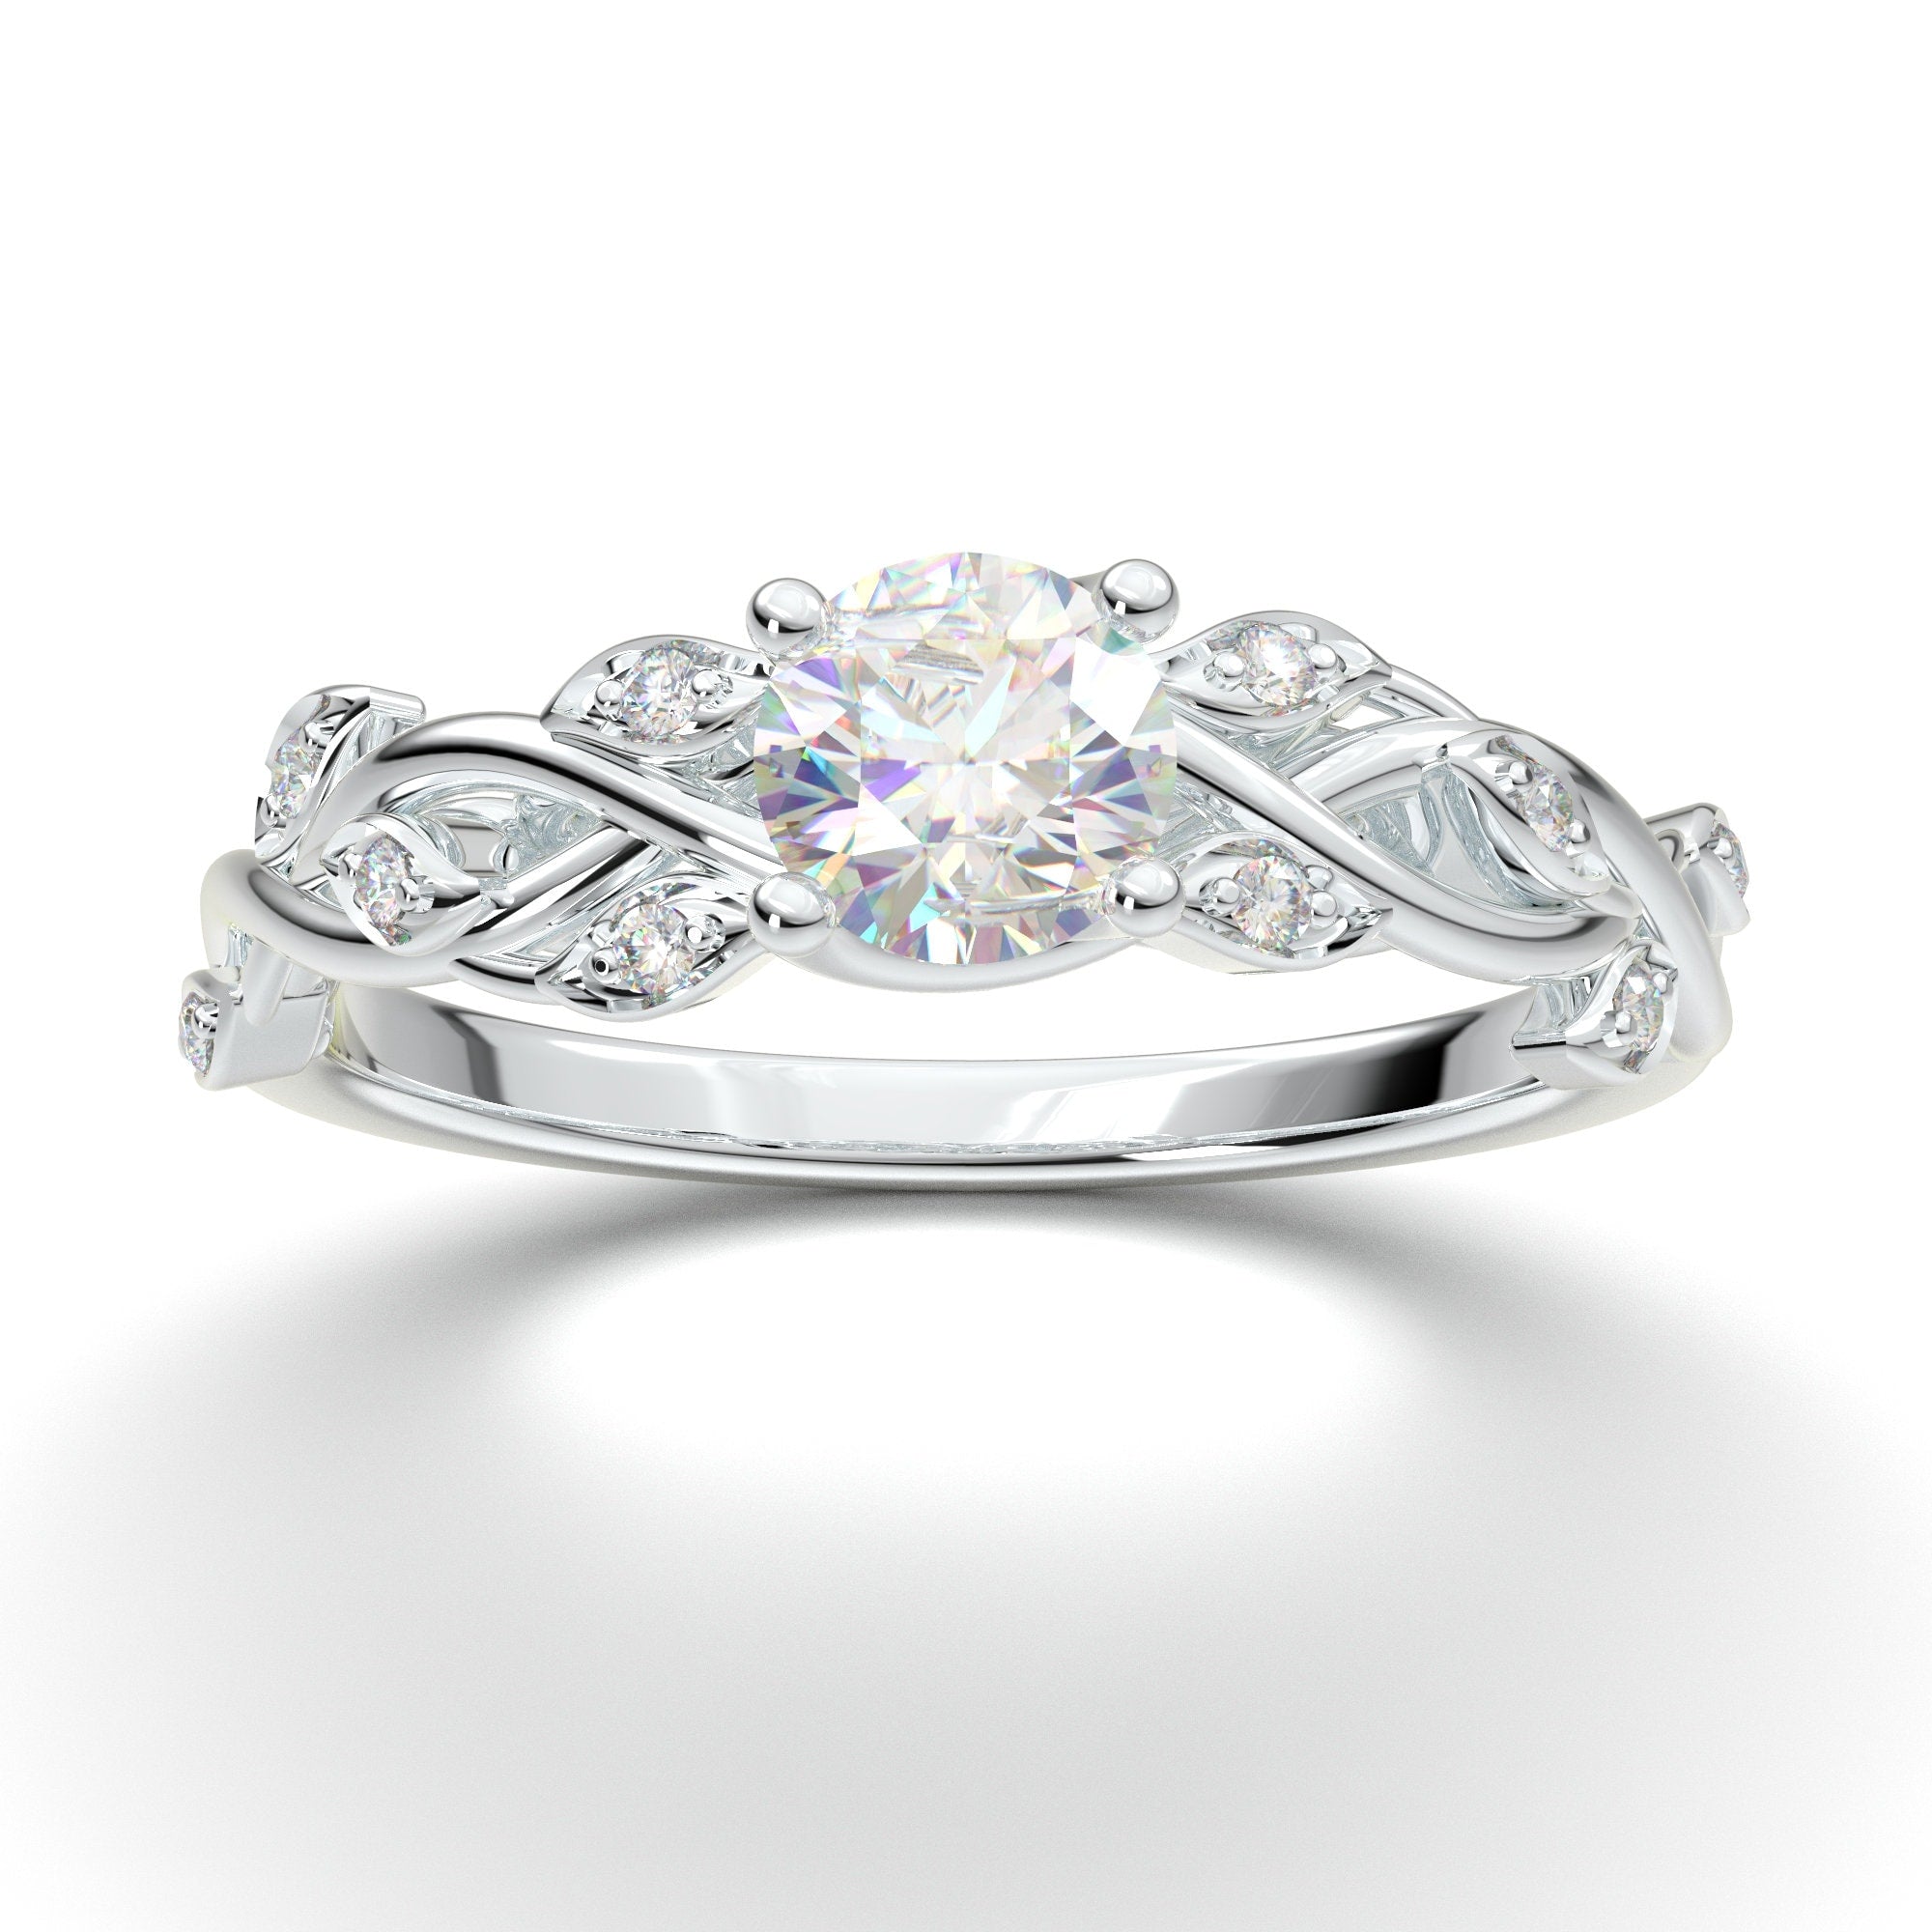 Art Deco Engagement Ring, Floral Wedding Ring, Vintage Inspired Band,